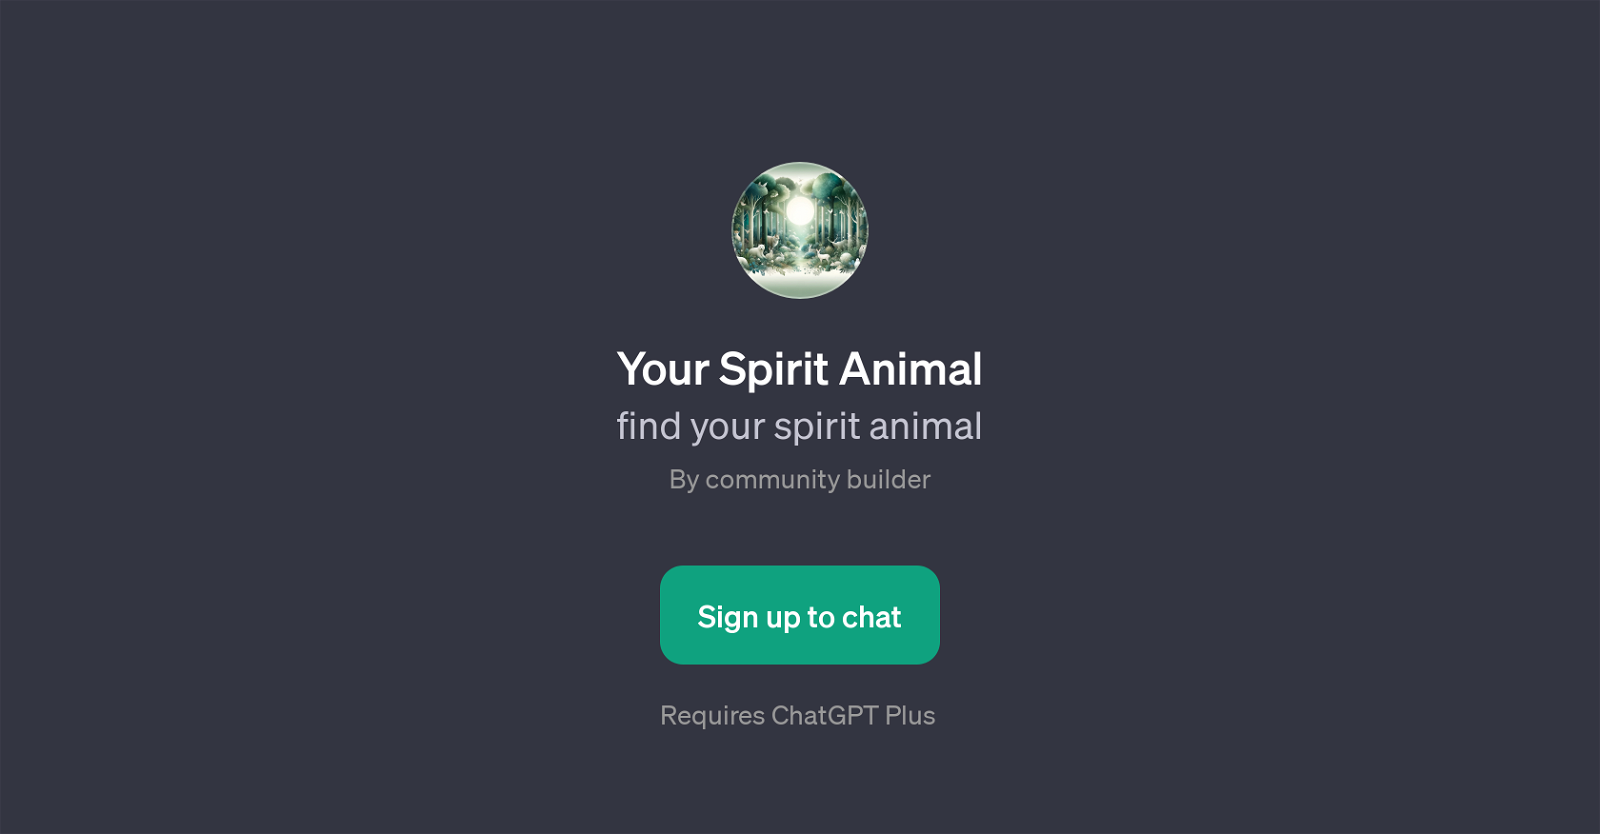 Your Spirit Animal website